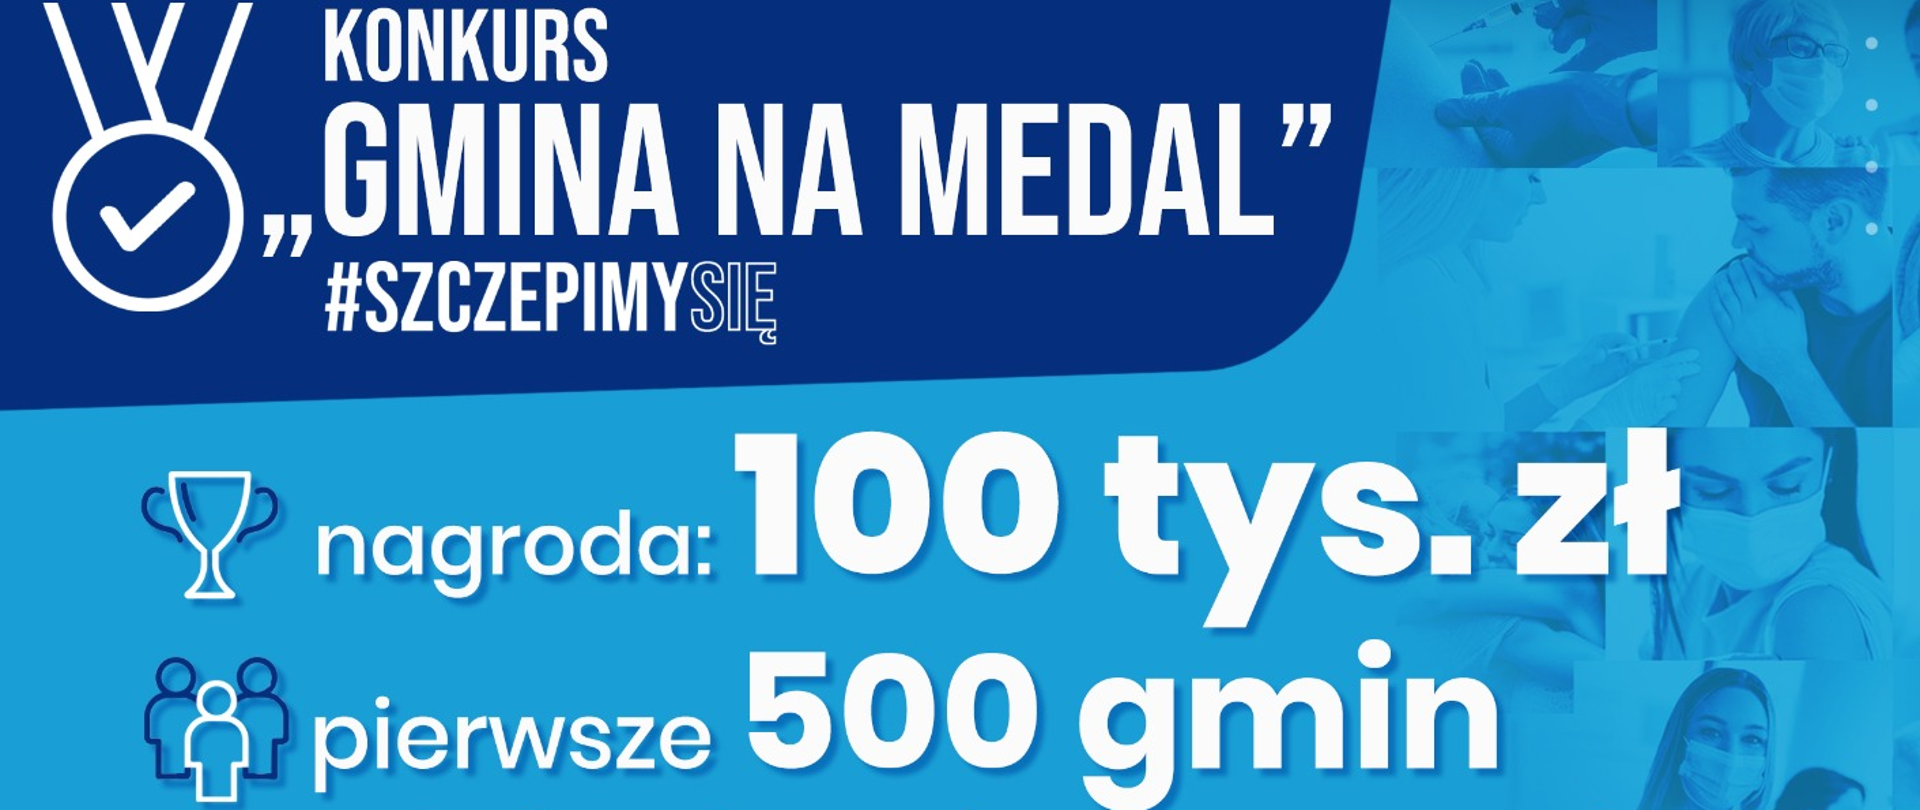 Konkurs "Gmina na medal"